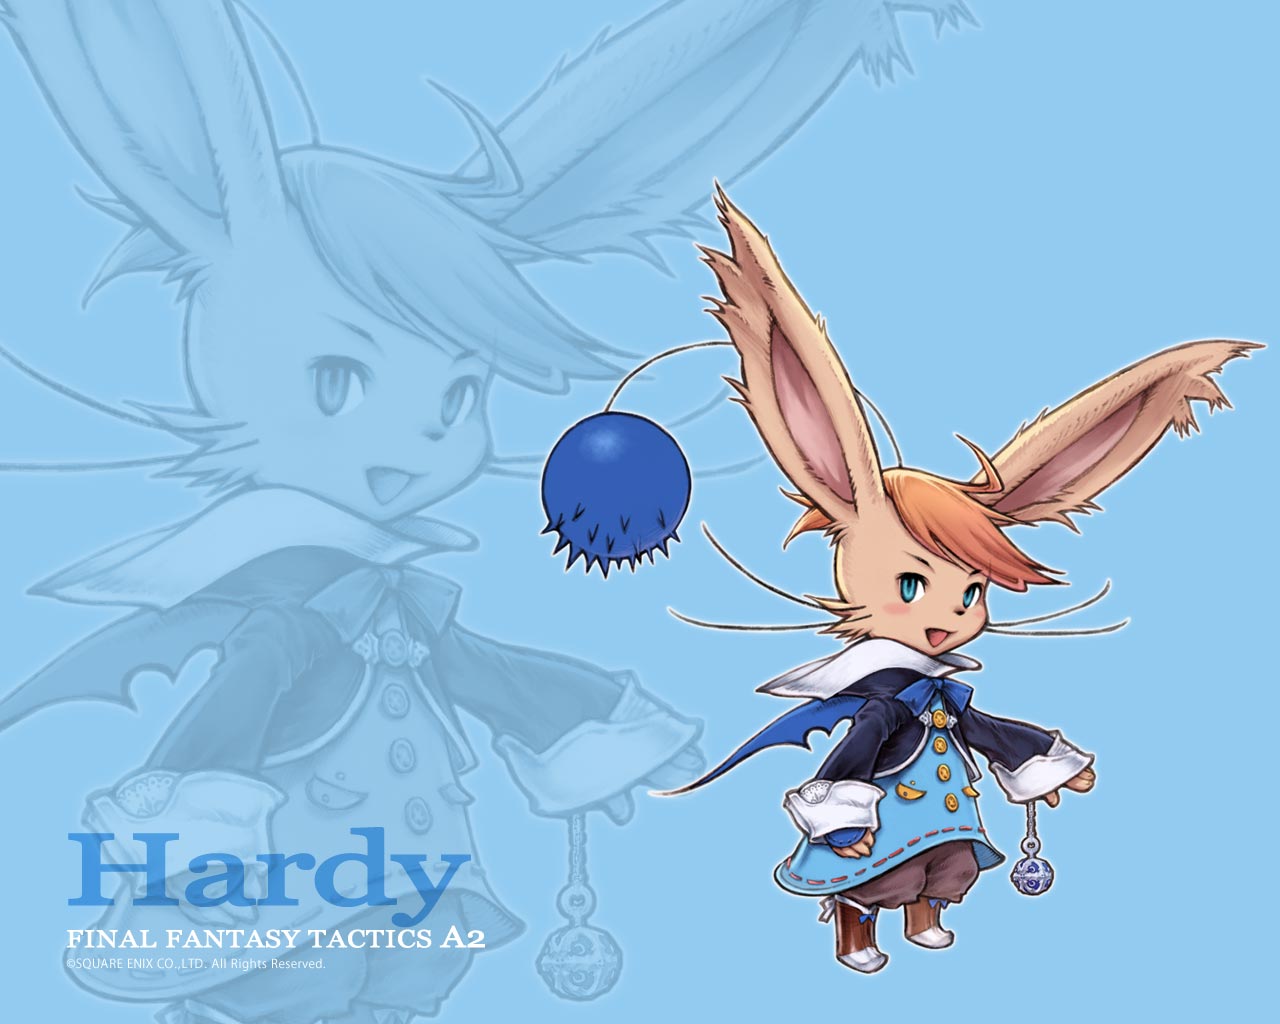 Final Fantasy Final Fantasy Tactics A2 Hardy - Final Fantasy Tactics A2 - HD Wallpaper 